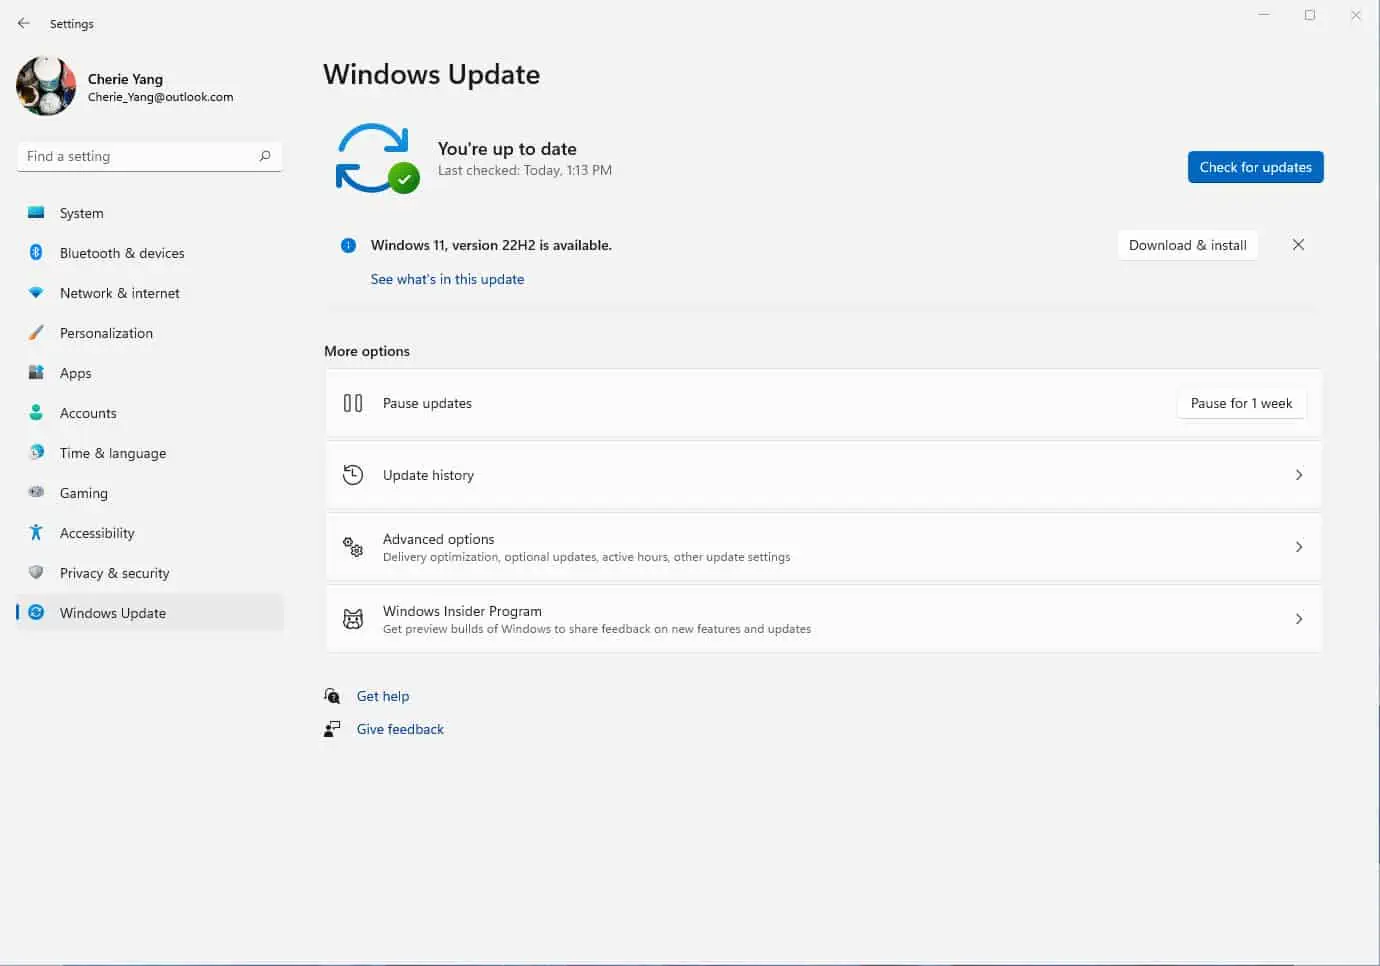 Windows Update page